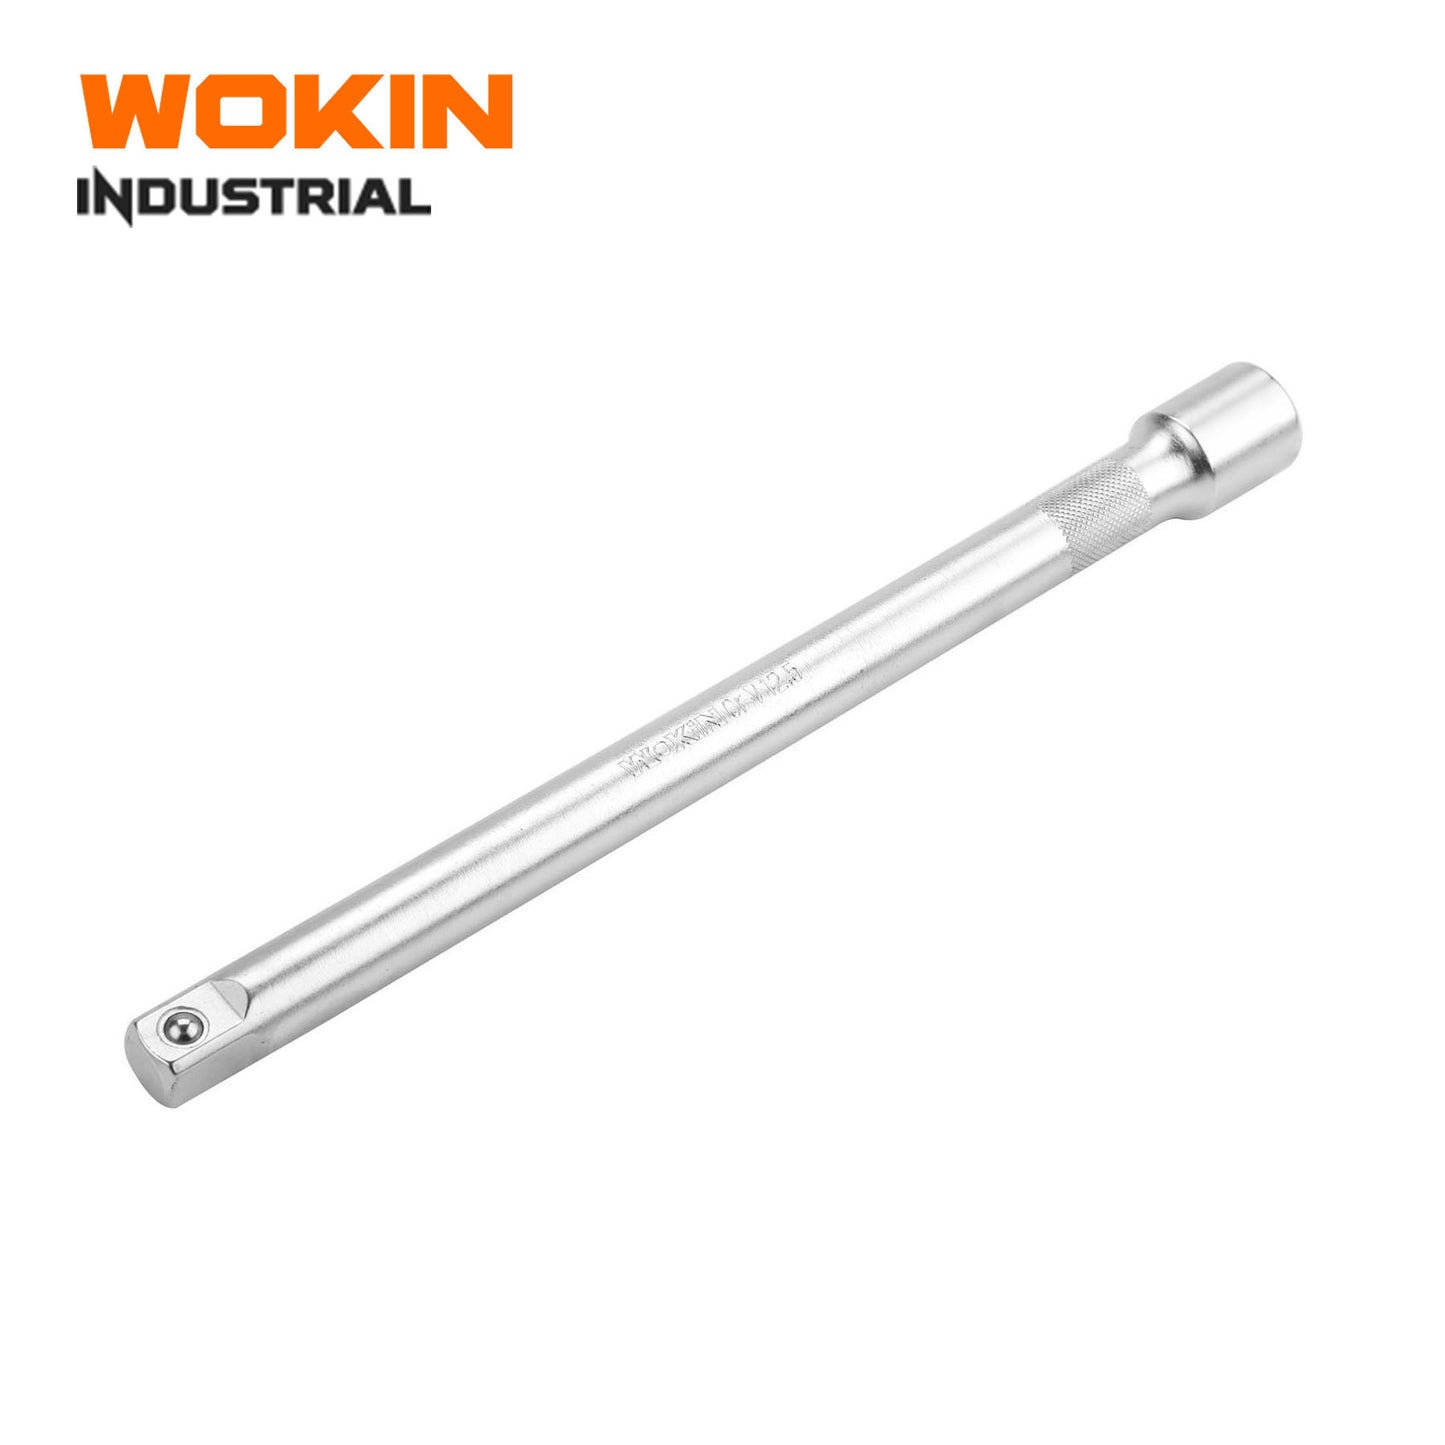 Wokin 1/4 Inch Extension Bar